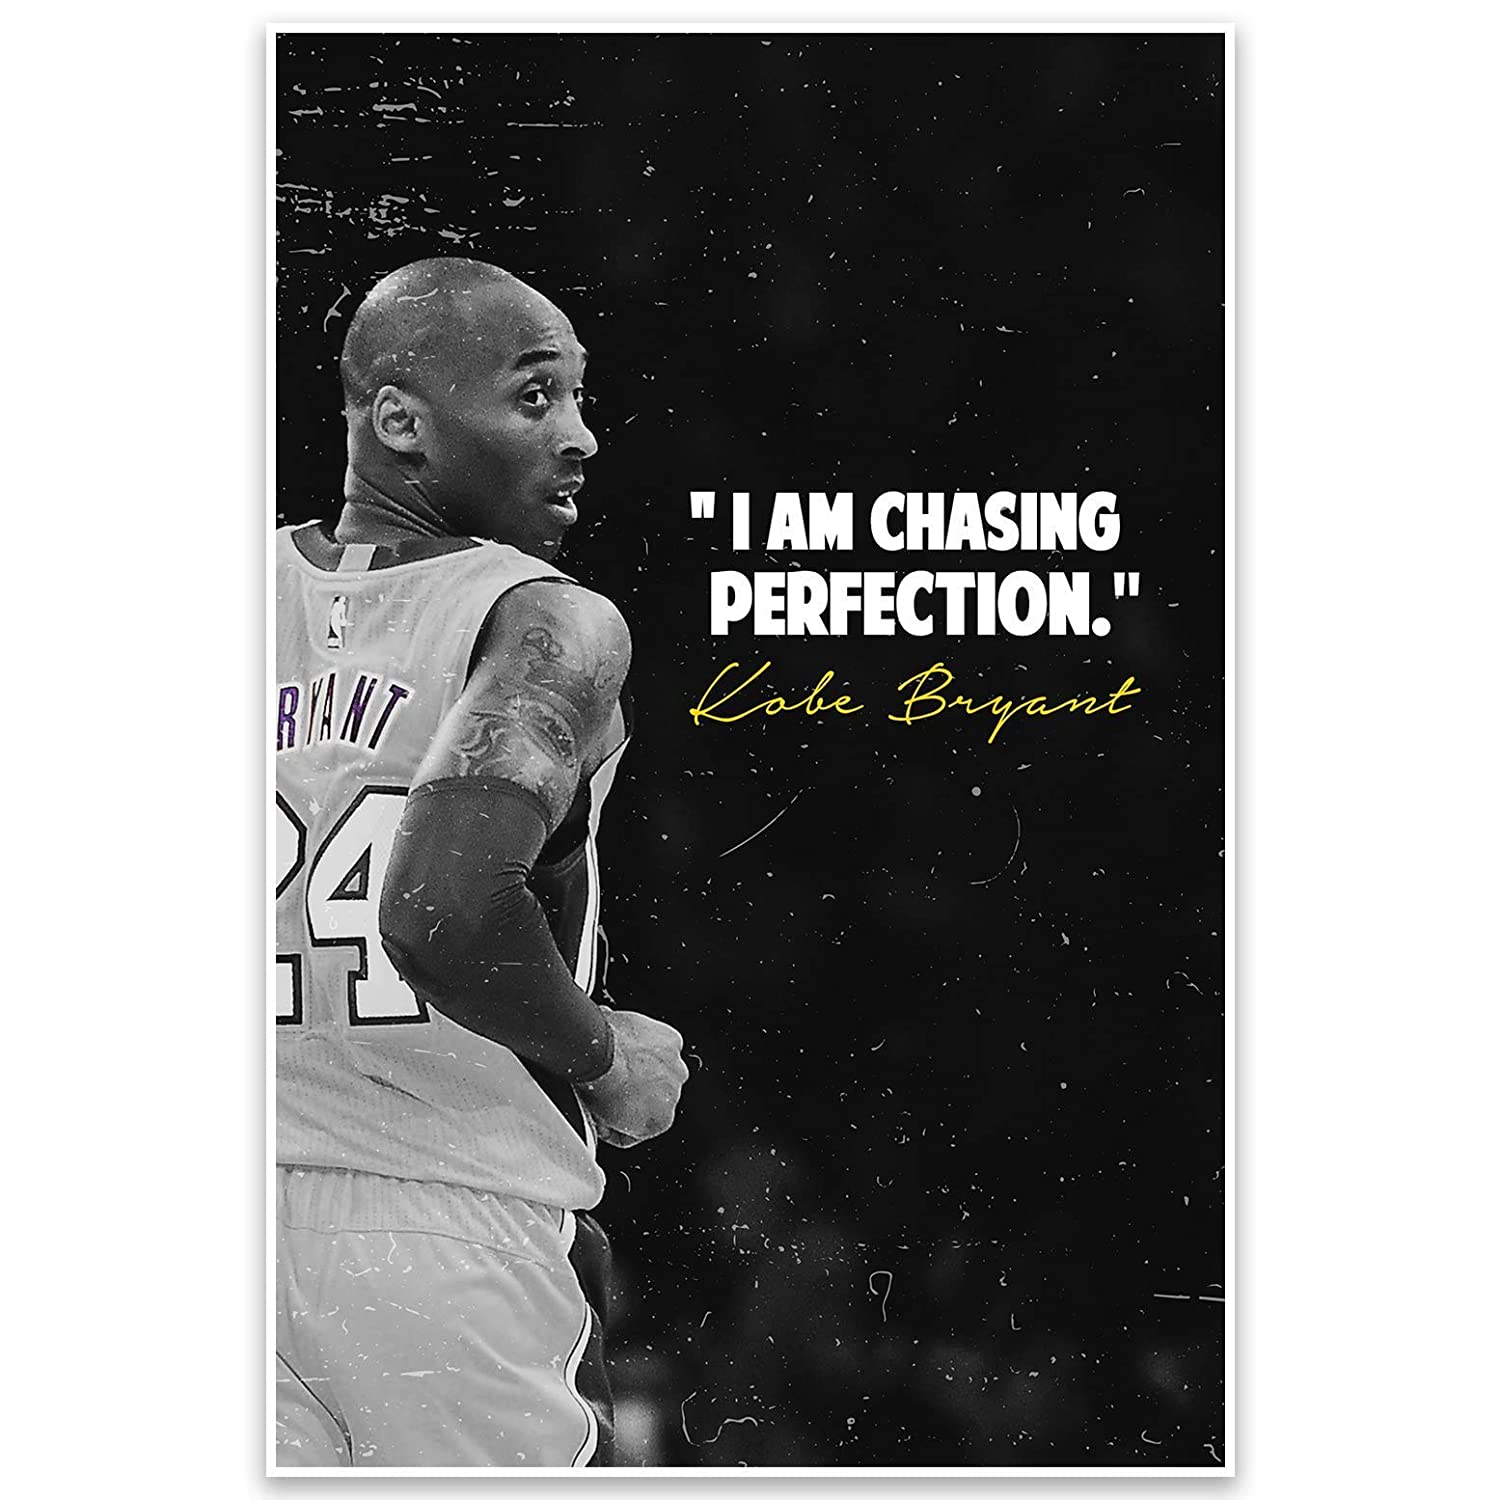 Kobe Bryant Motivational Wallpapers